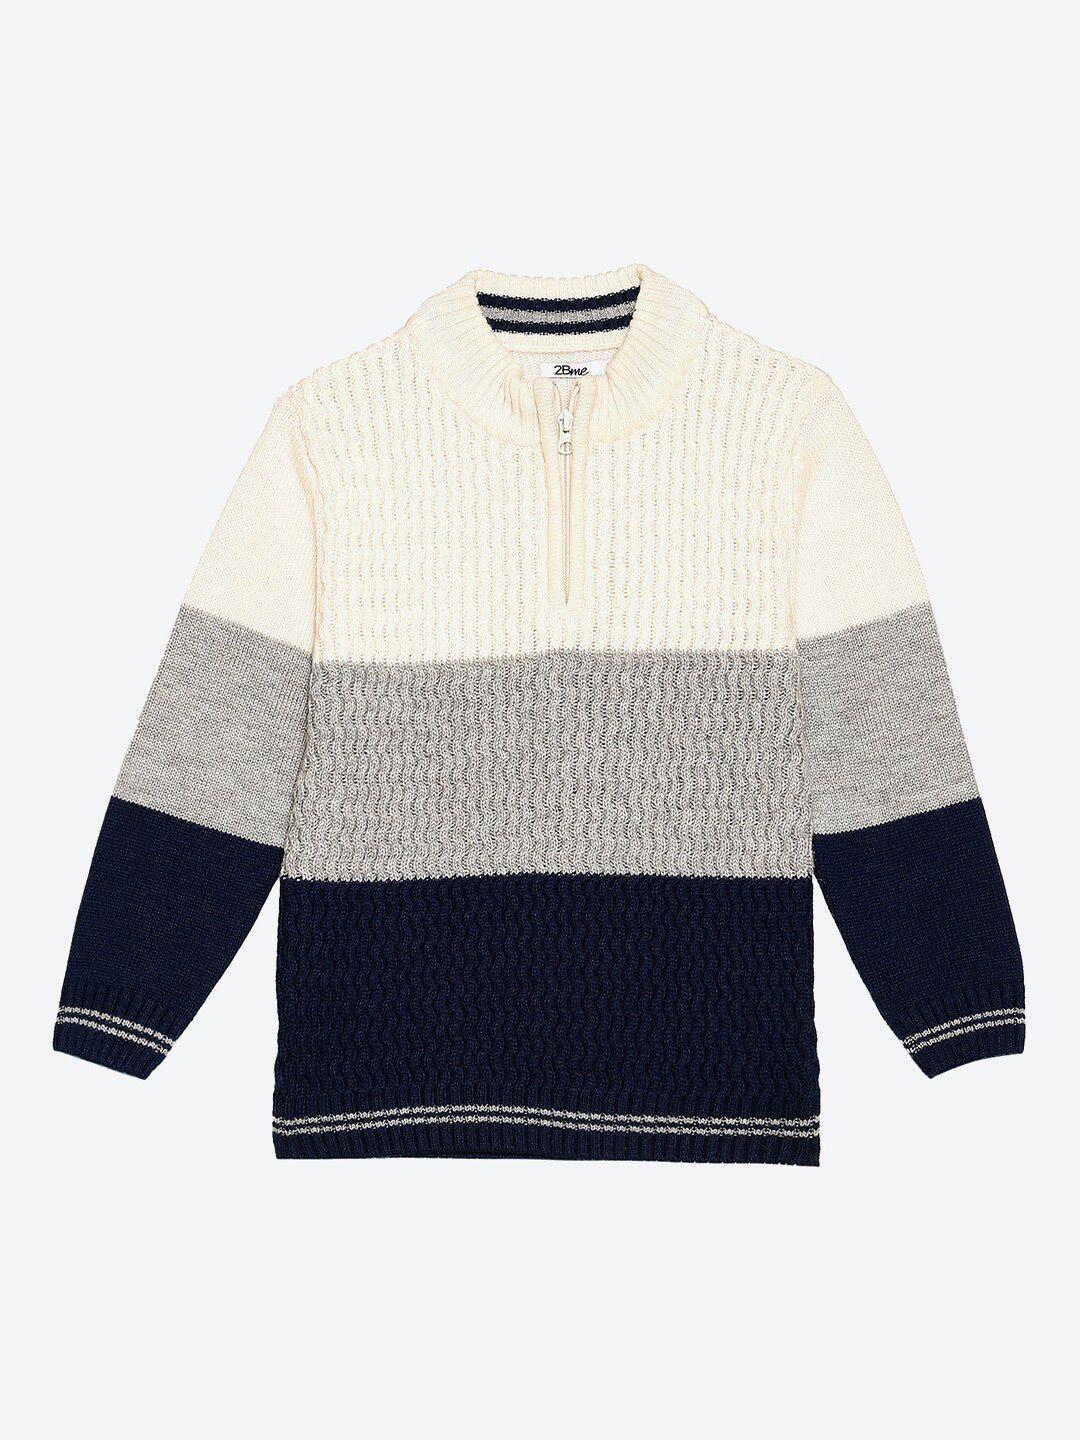 2bme boys colourblocked pullover mock collar acrylic pullover sweaters